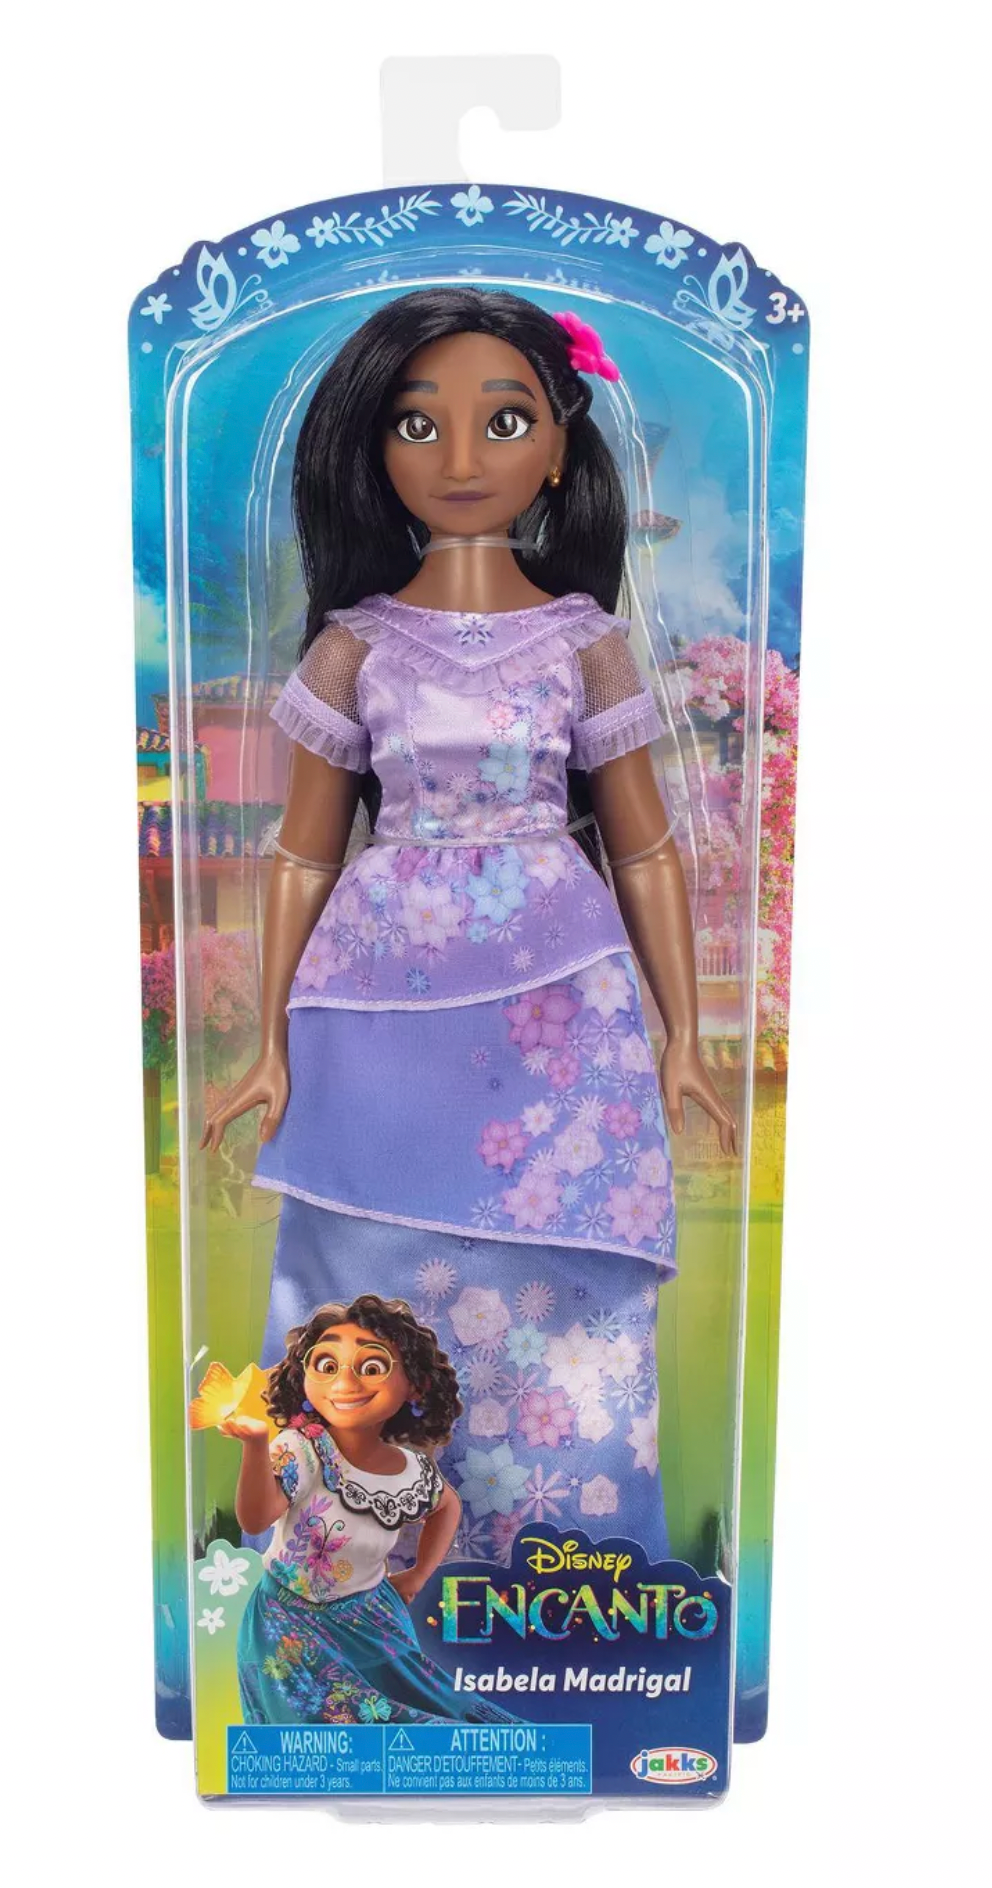 Disney Encanto Isabela Madrigal Fashion Doll Toy New with Box